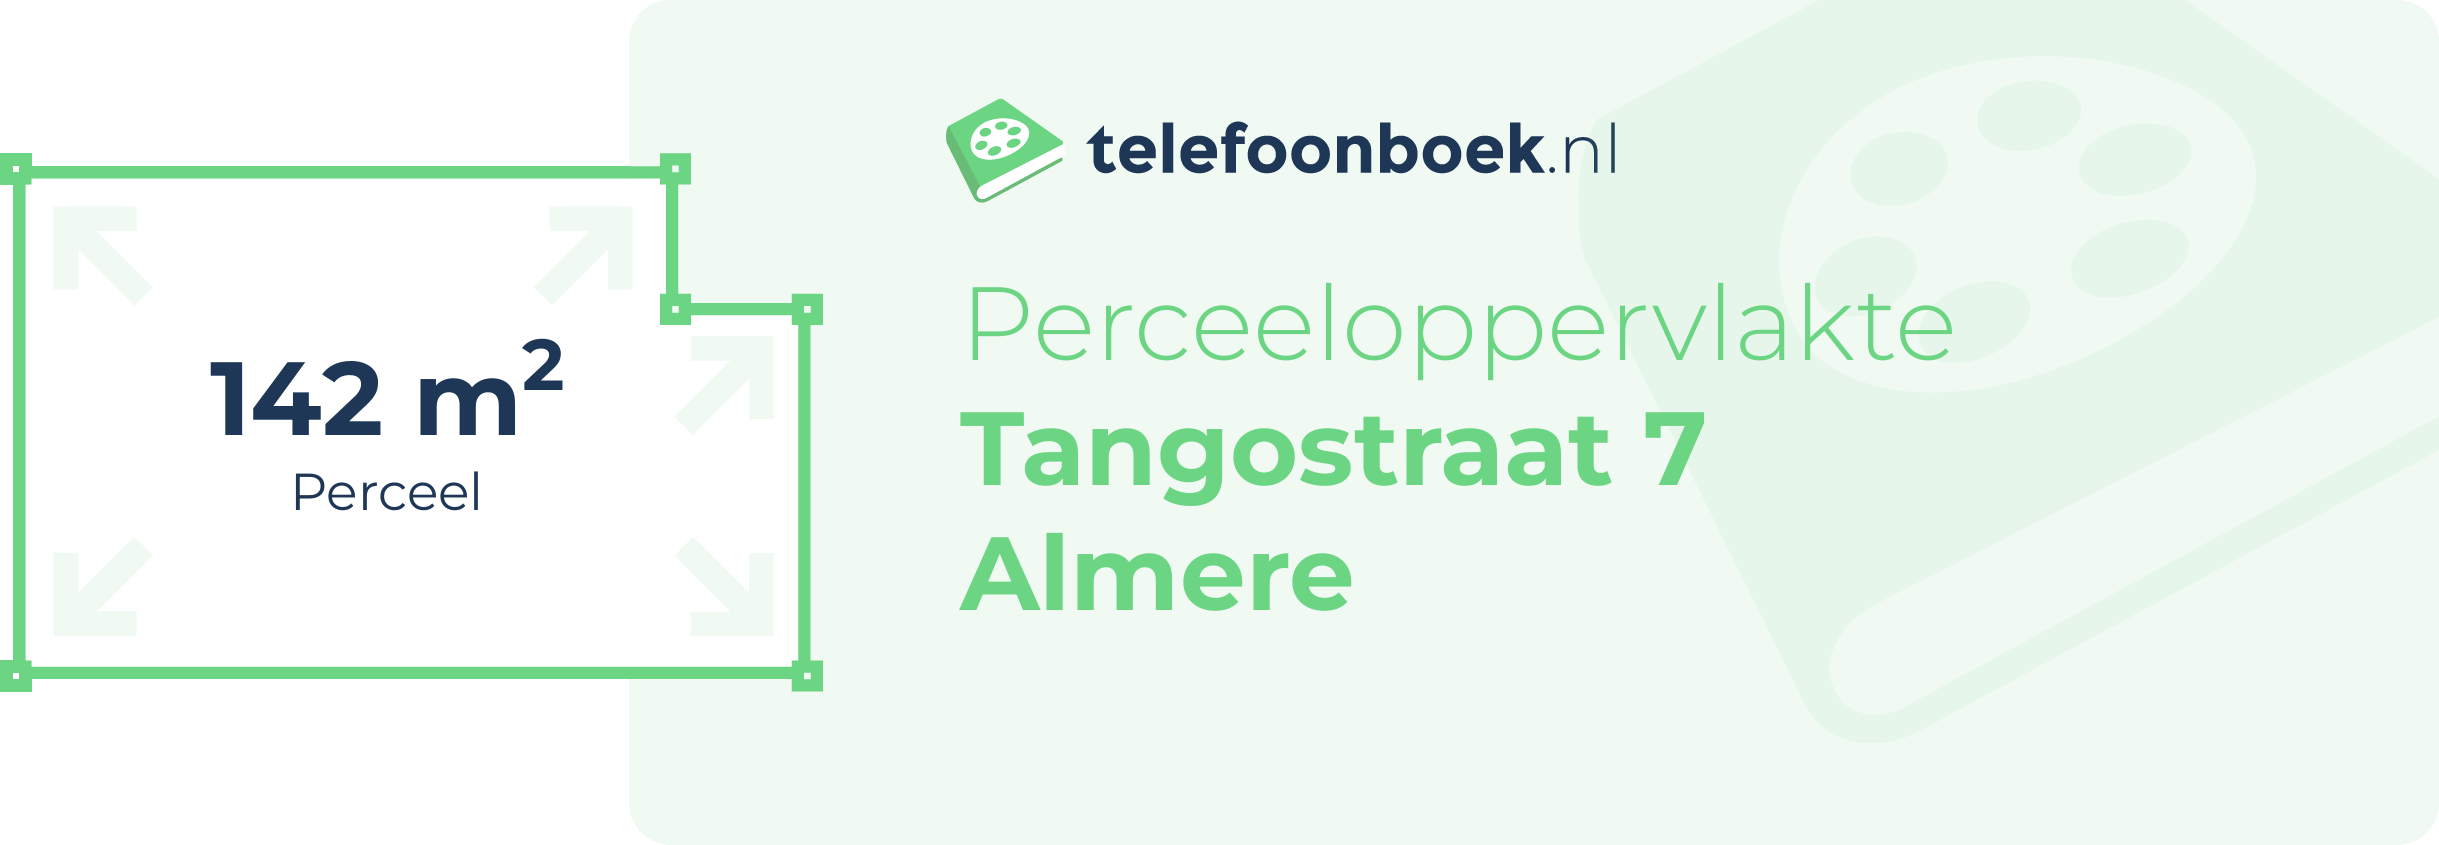 Perceeloppervlakte Tangostraat 7 Almere